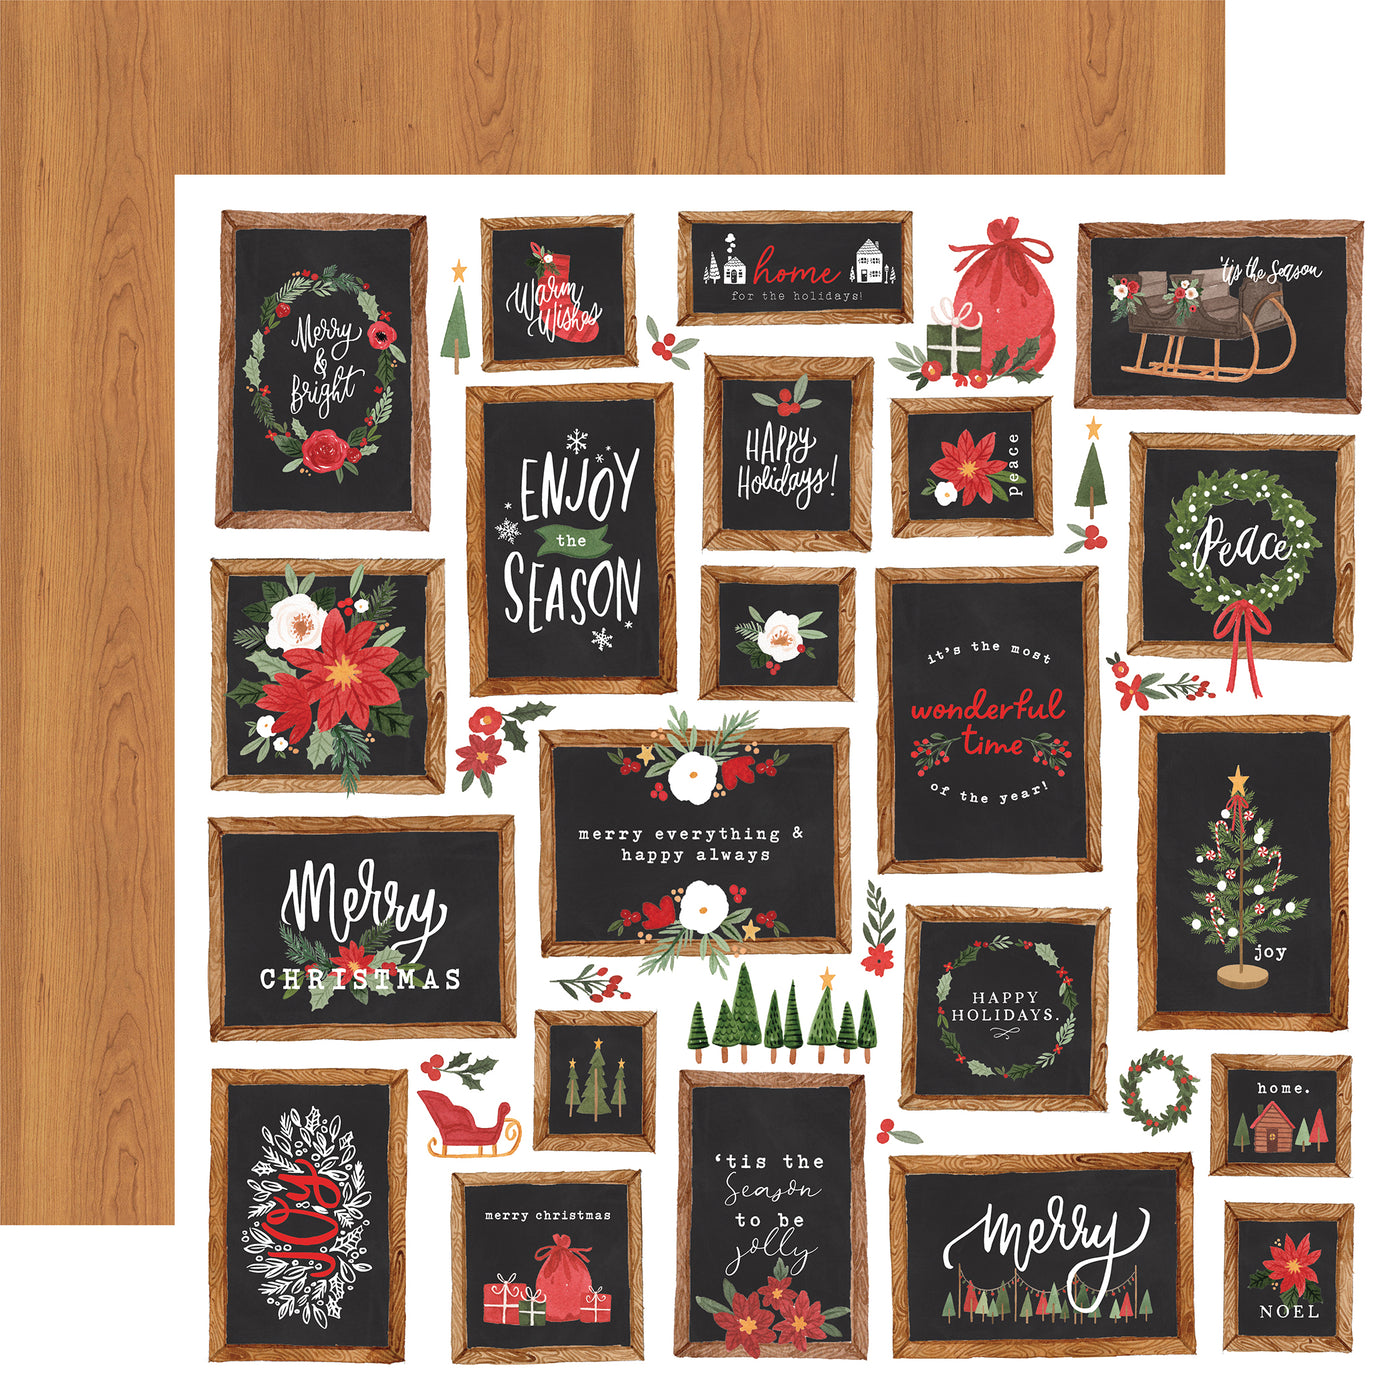 Carta Bella Happy Christmas Element Sticker Sheet – Cheap